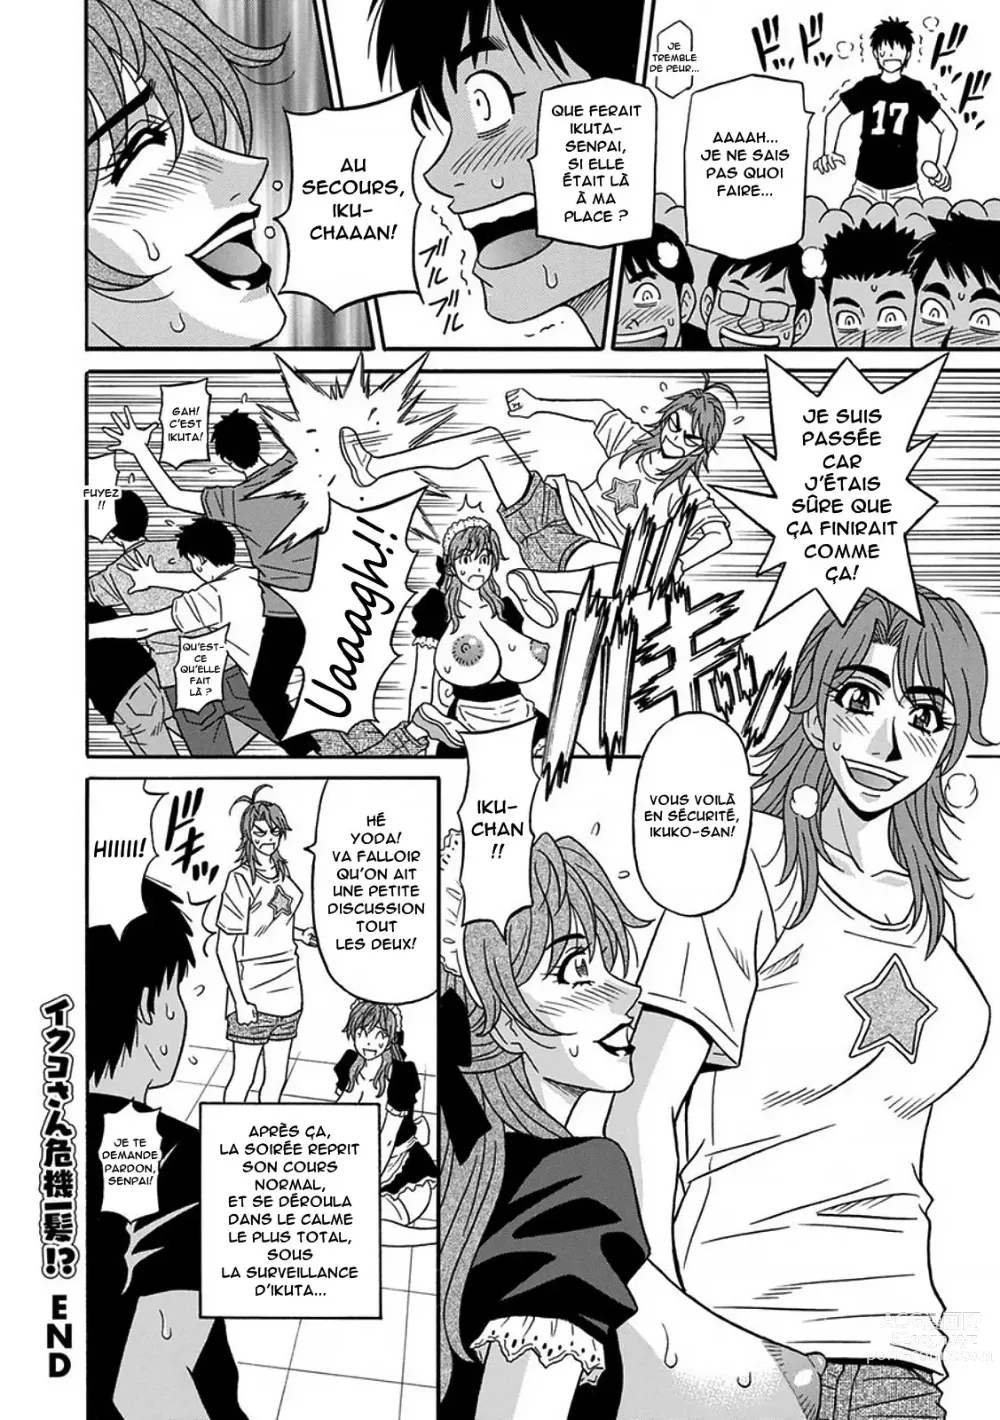 Page 193 of manga Hitozuma Seiyuu Ikuko-san